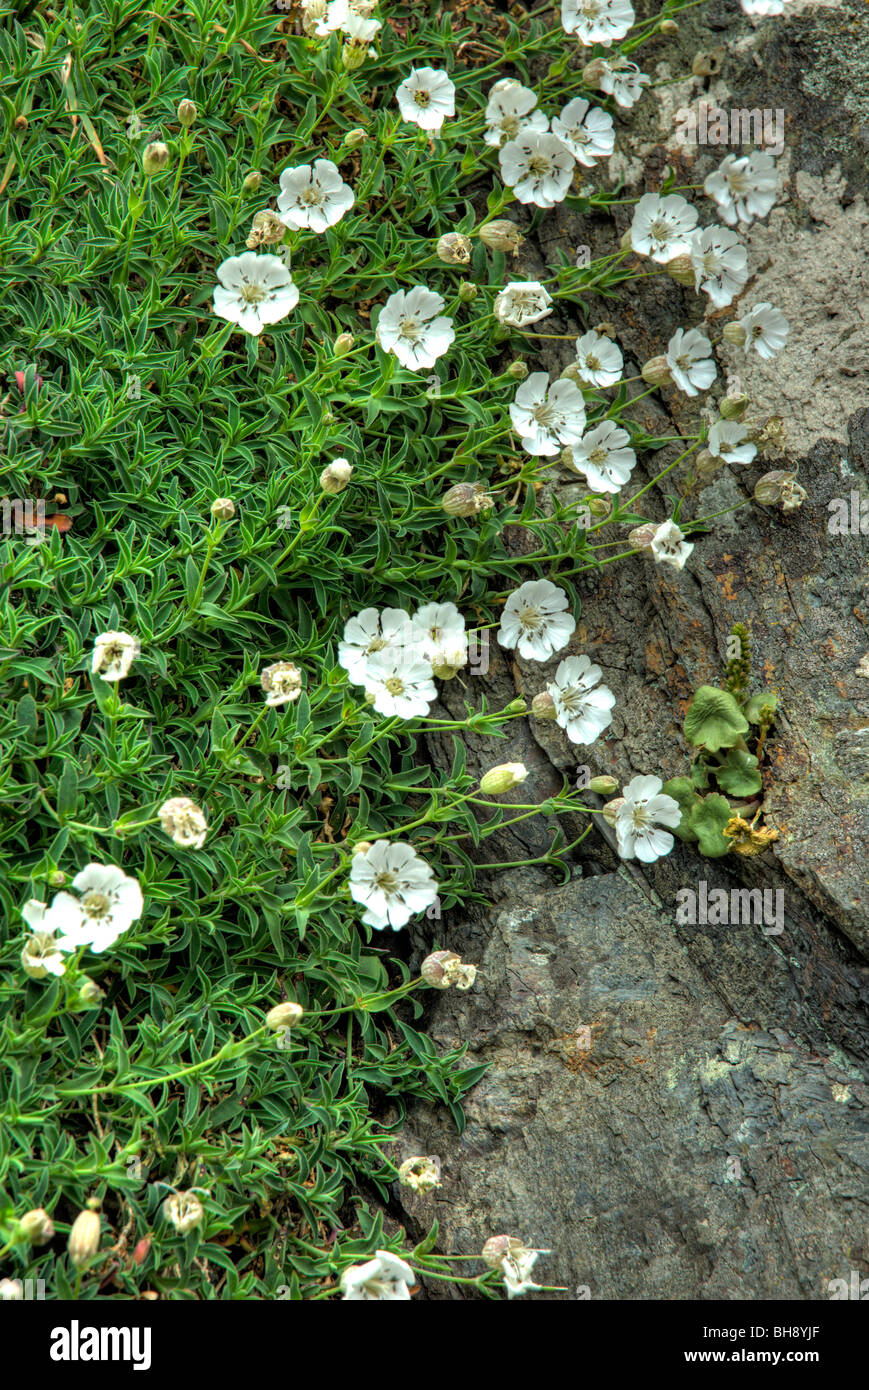 White campion flowers growing on rocks at seaside Stock Photo